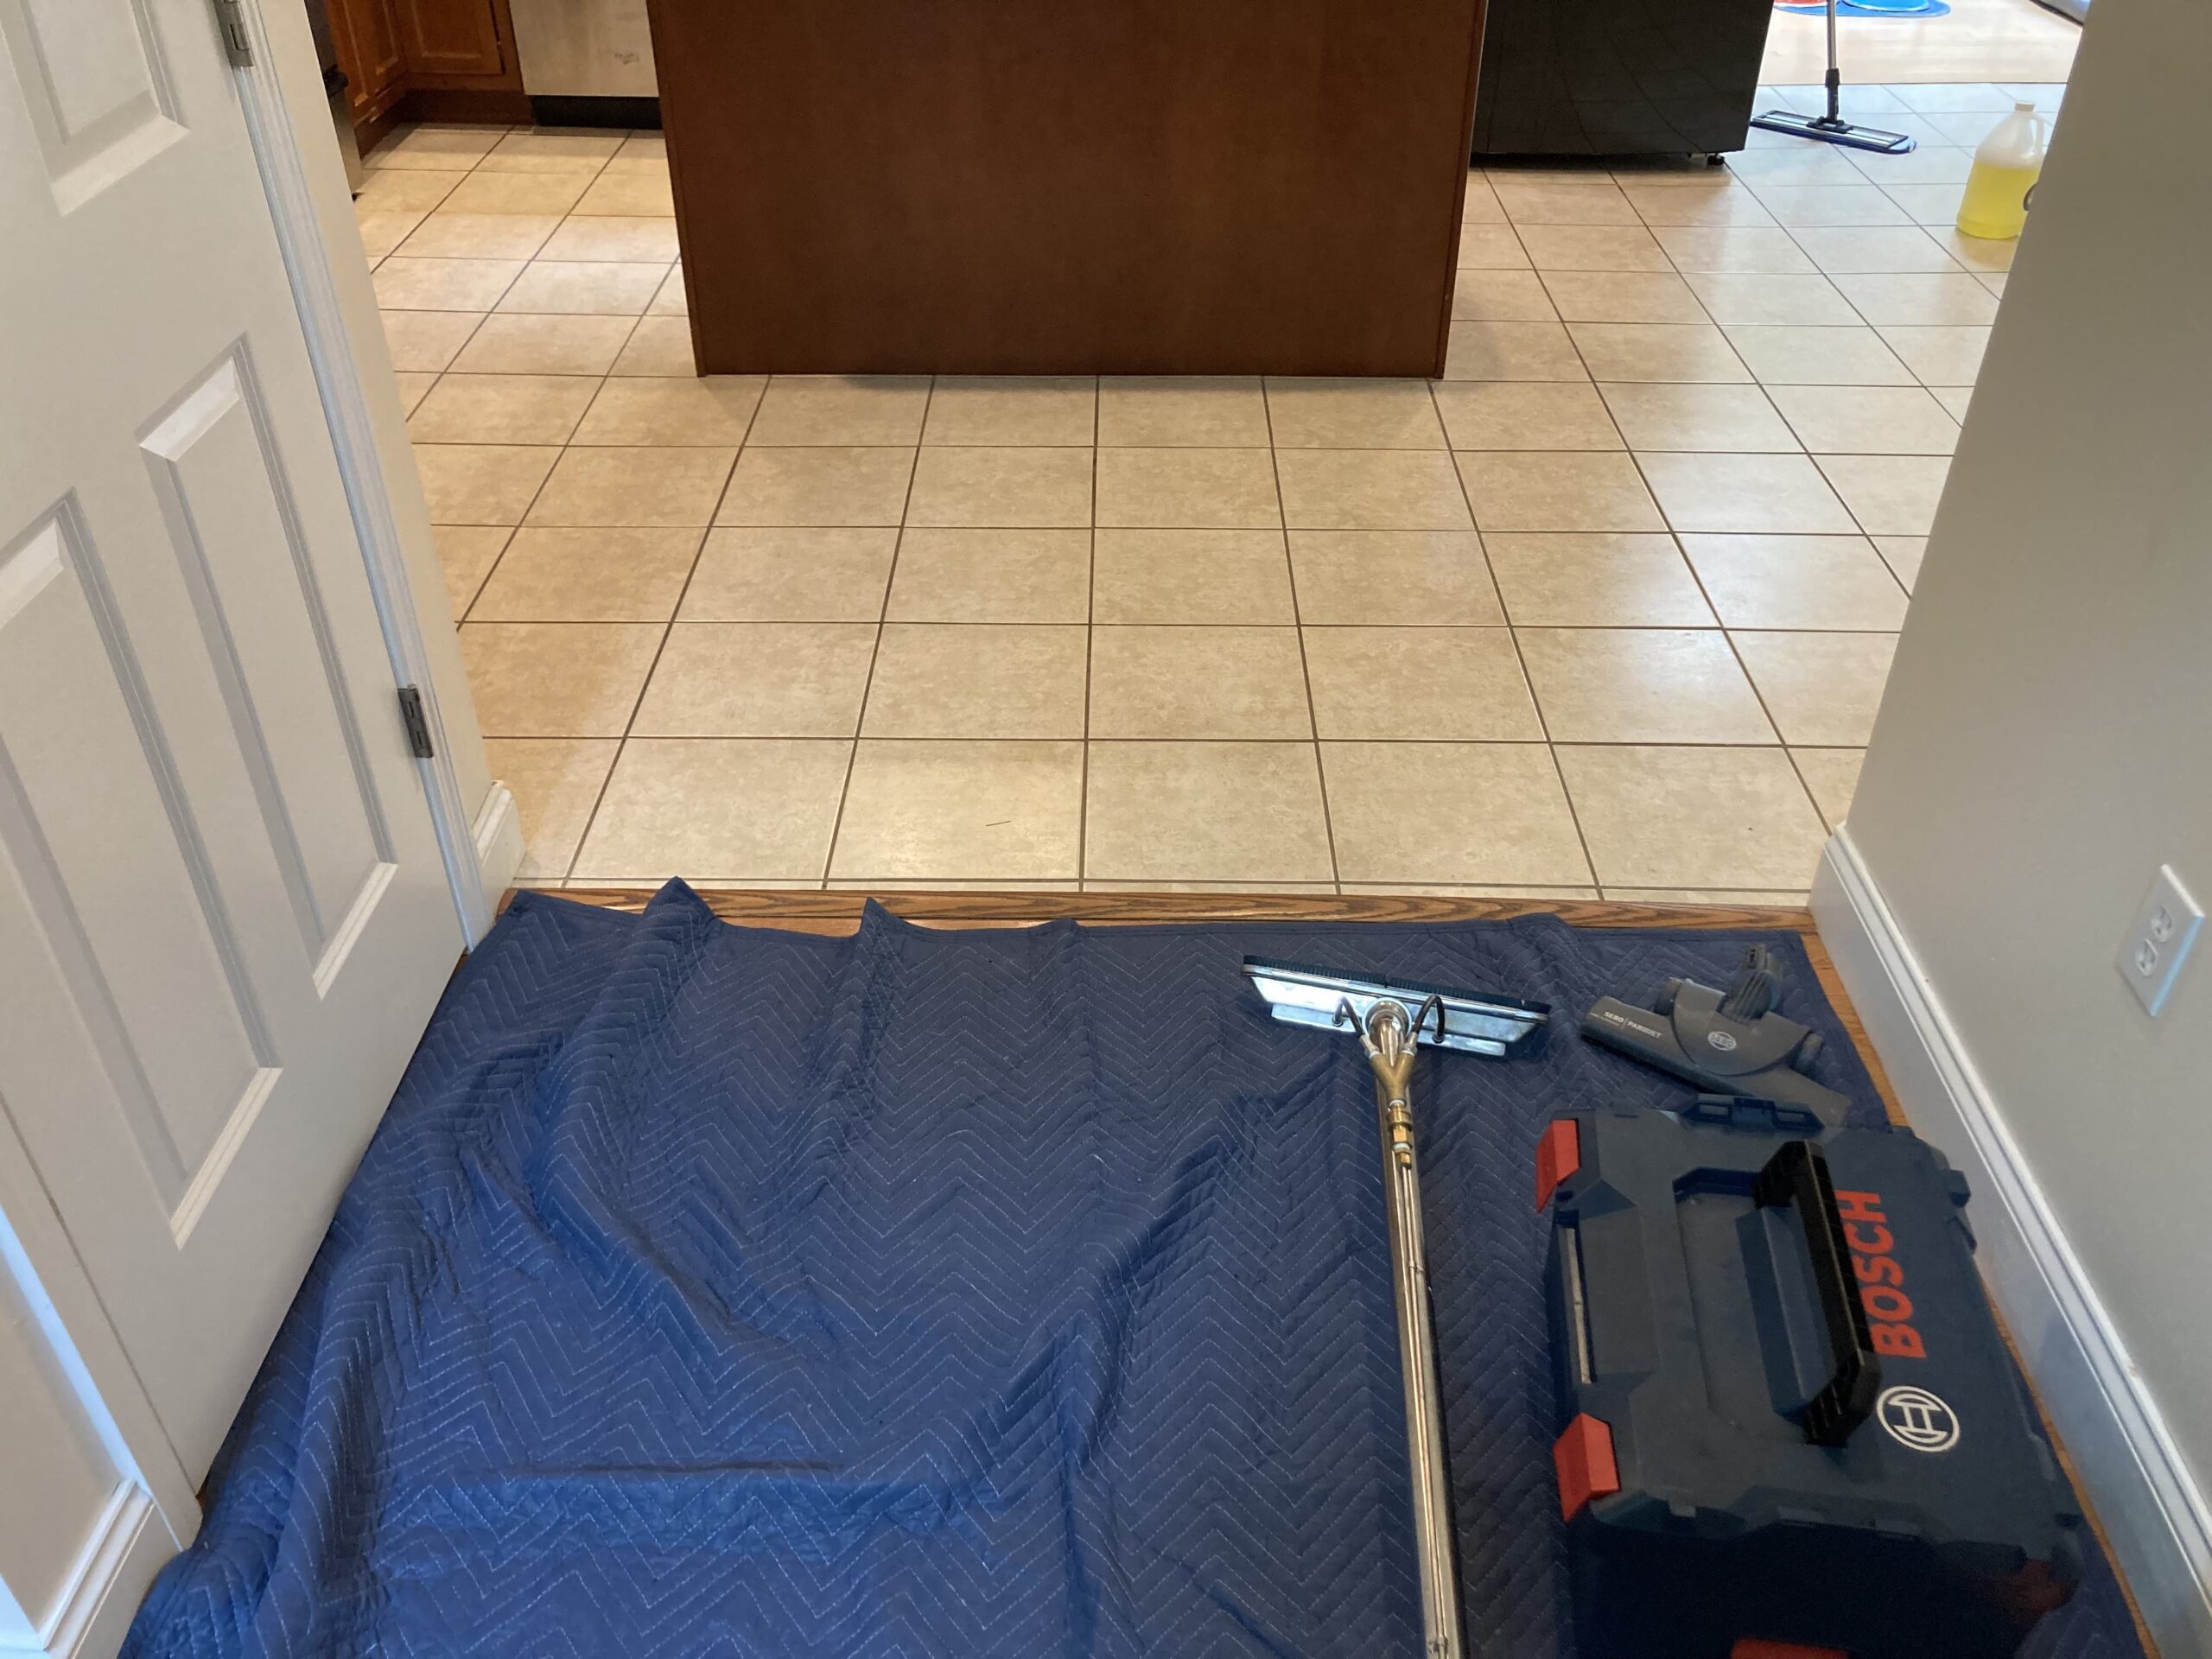 image of tile cleaning job setup